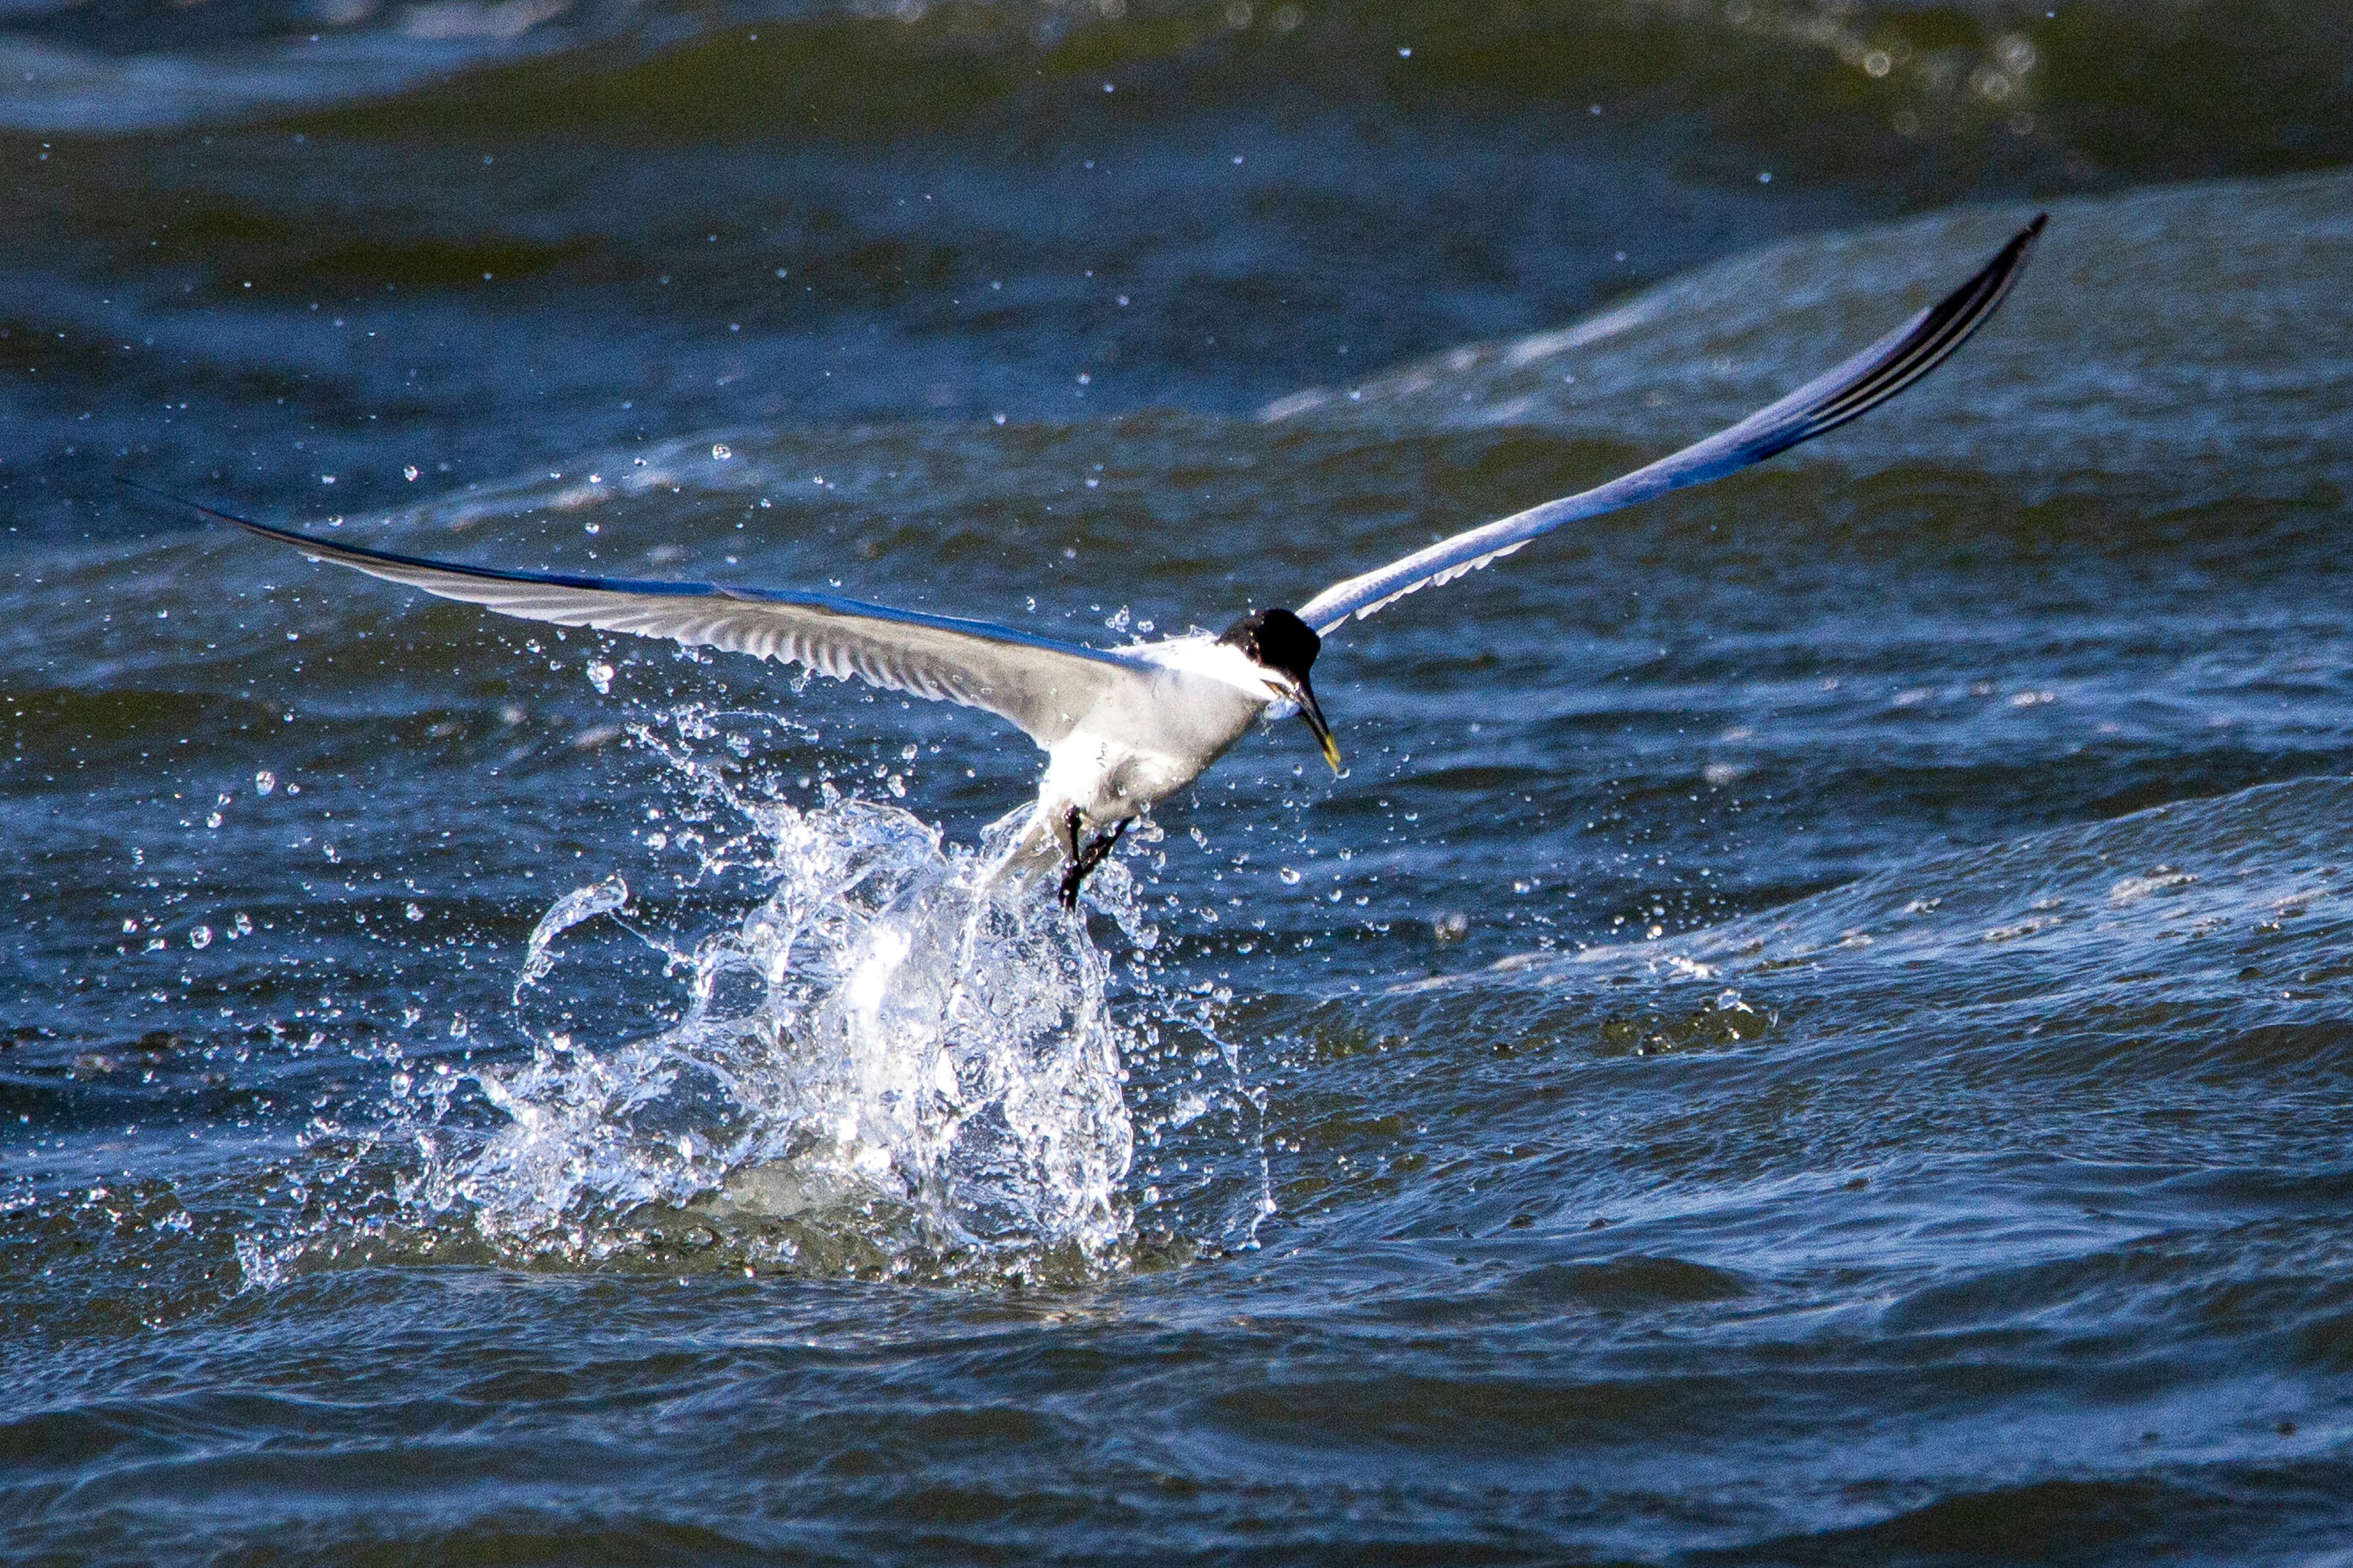 A least tern catches a fish.